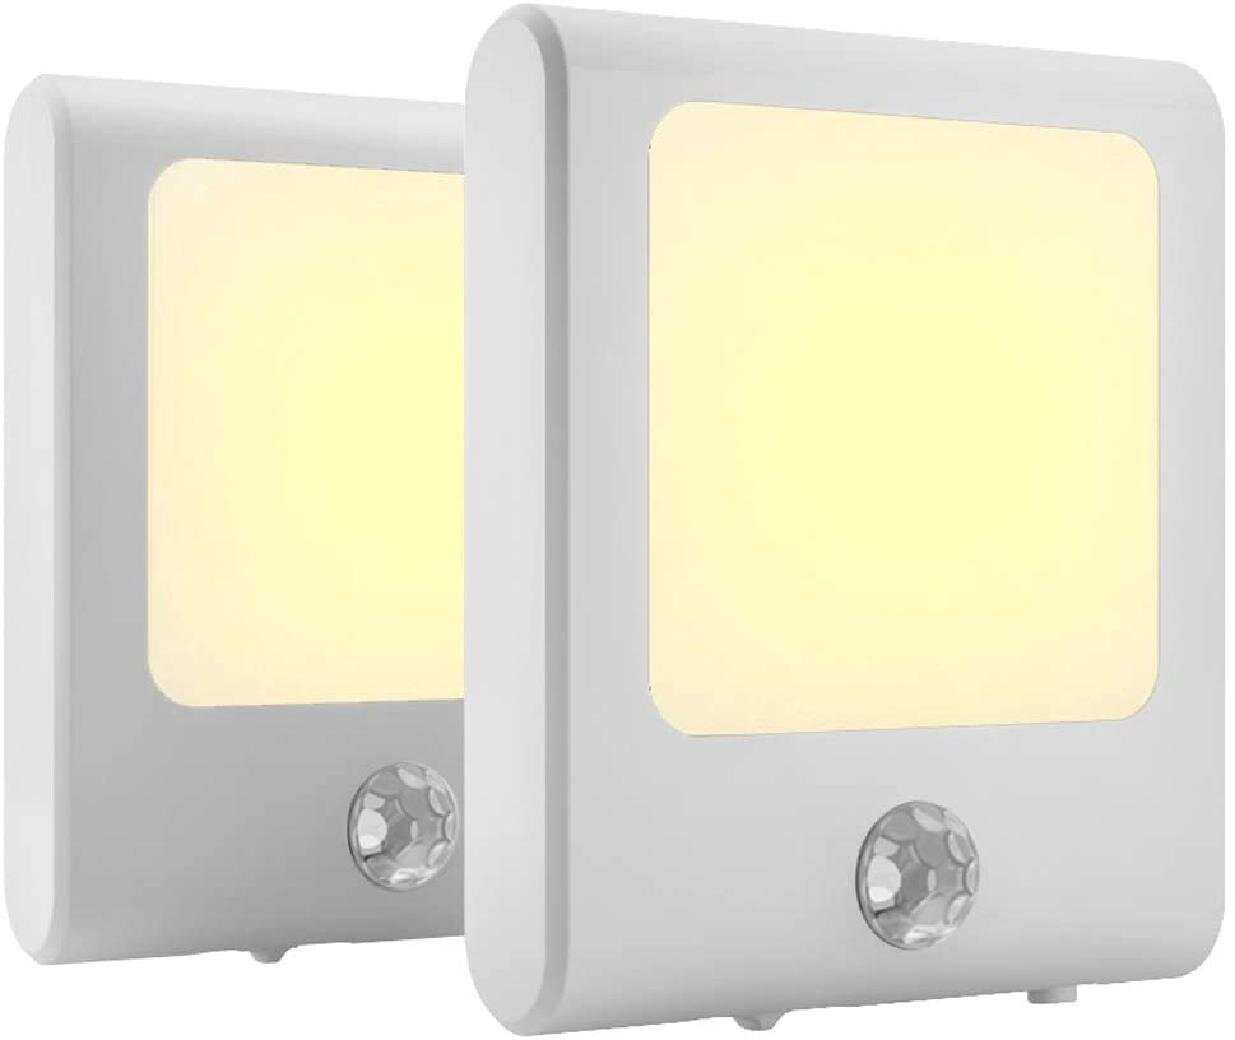 LED Night Light with Day/Night Sensor Night Lamp Warm White Orientation Light